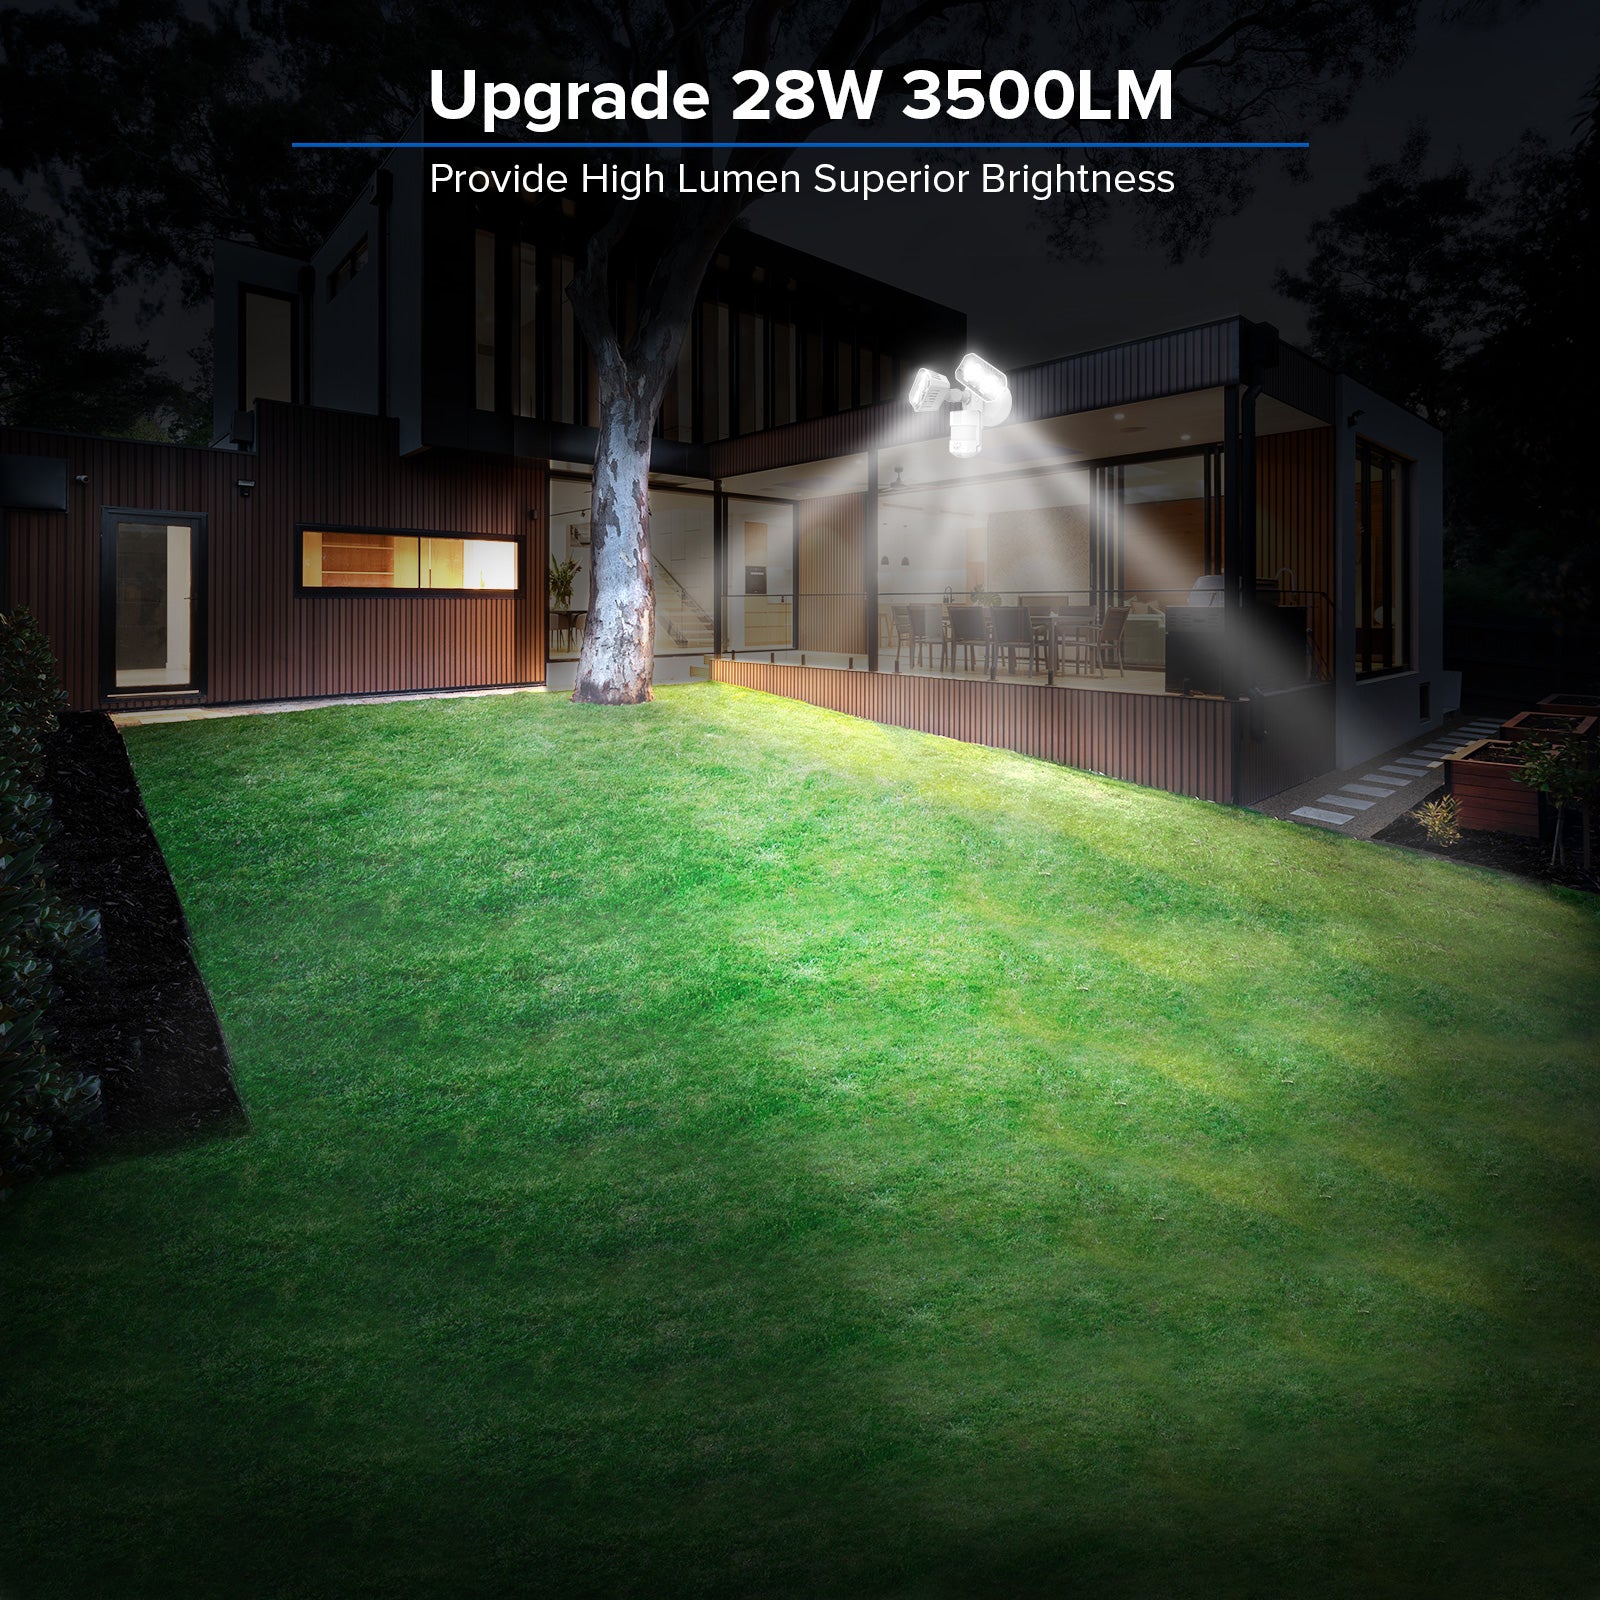 Upgraded 28W LED Security Light (Dusk to Dawn & Motion Sensor) provide 3500 lumen, superior brightness